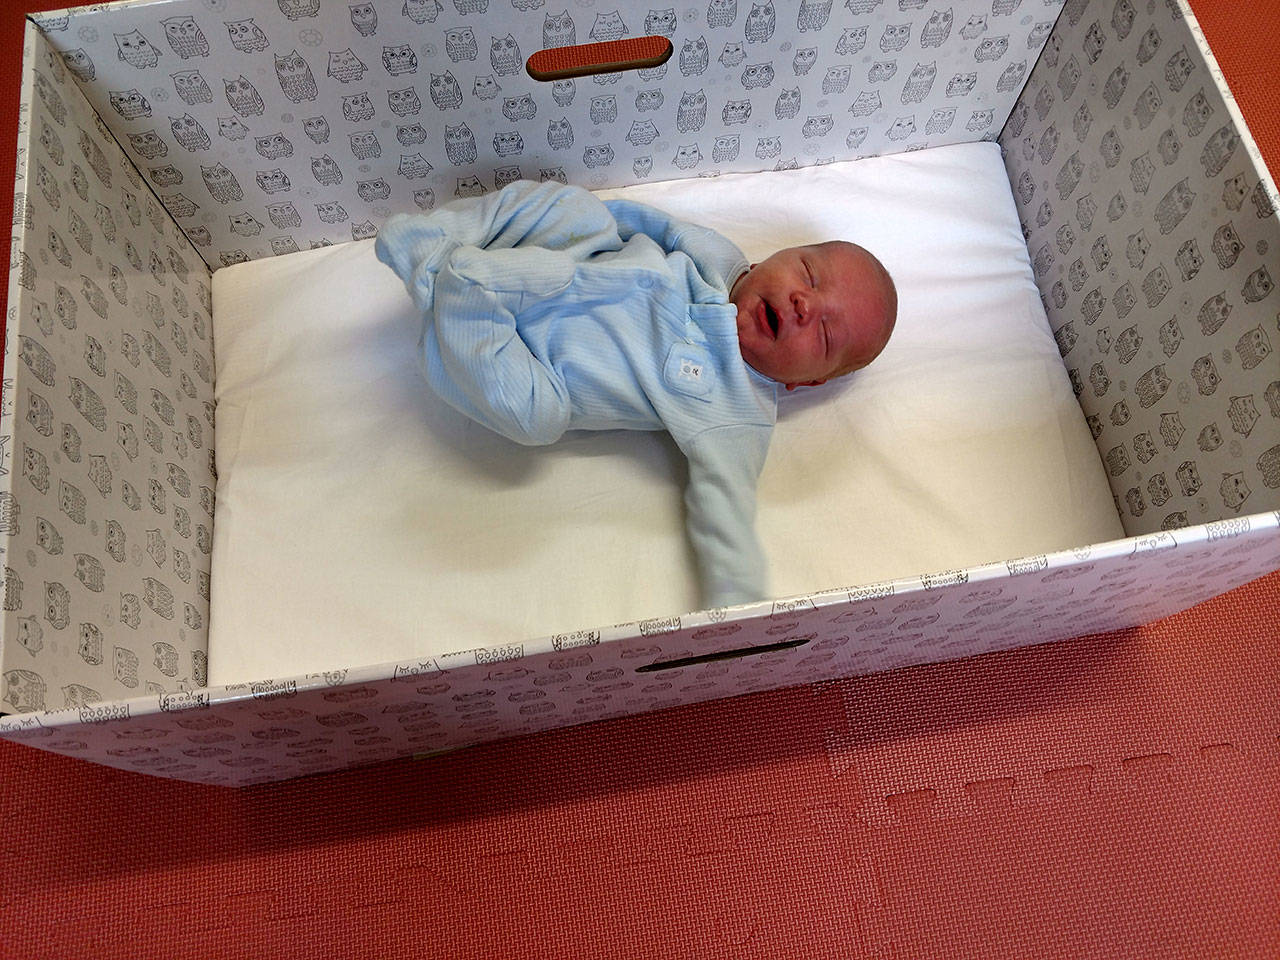 Baby Rhett sleeps peacefully in his new baby box. (Susan Riemer/Staff Photo)